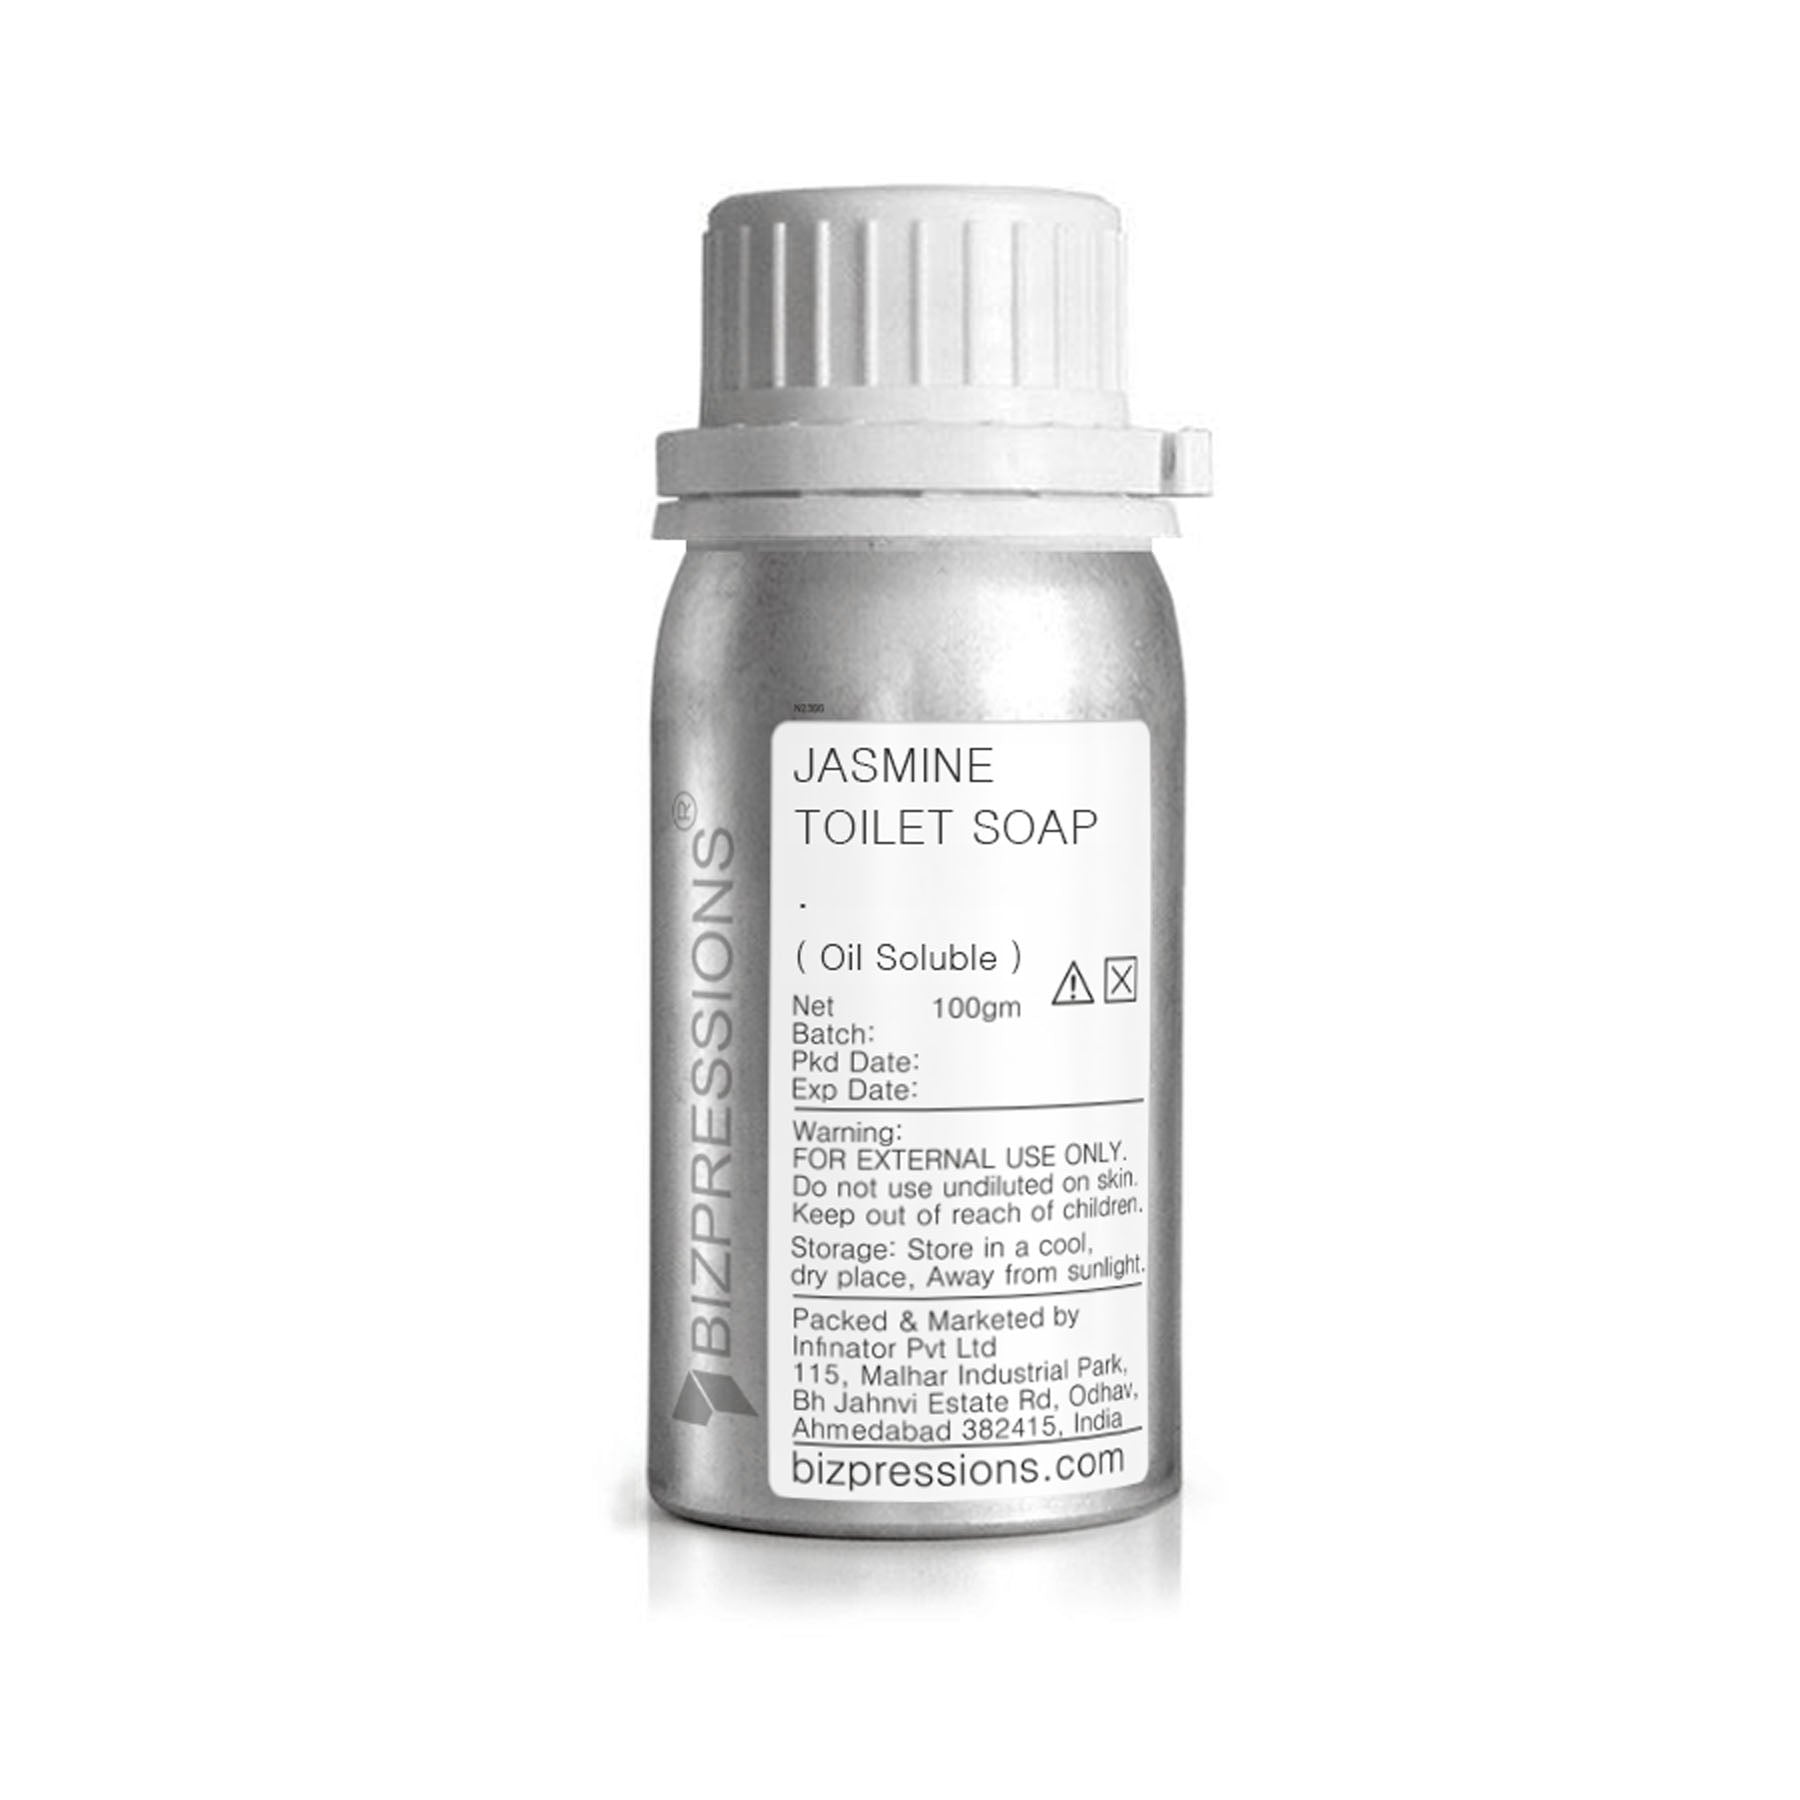 JASMINE TOILET Soap - Fragrance ( Oil Soluble ) - 100 gm